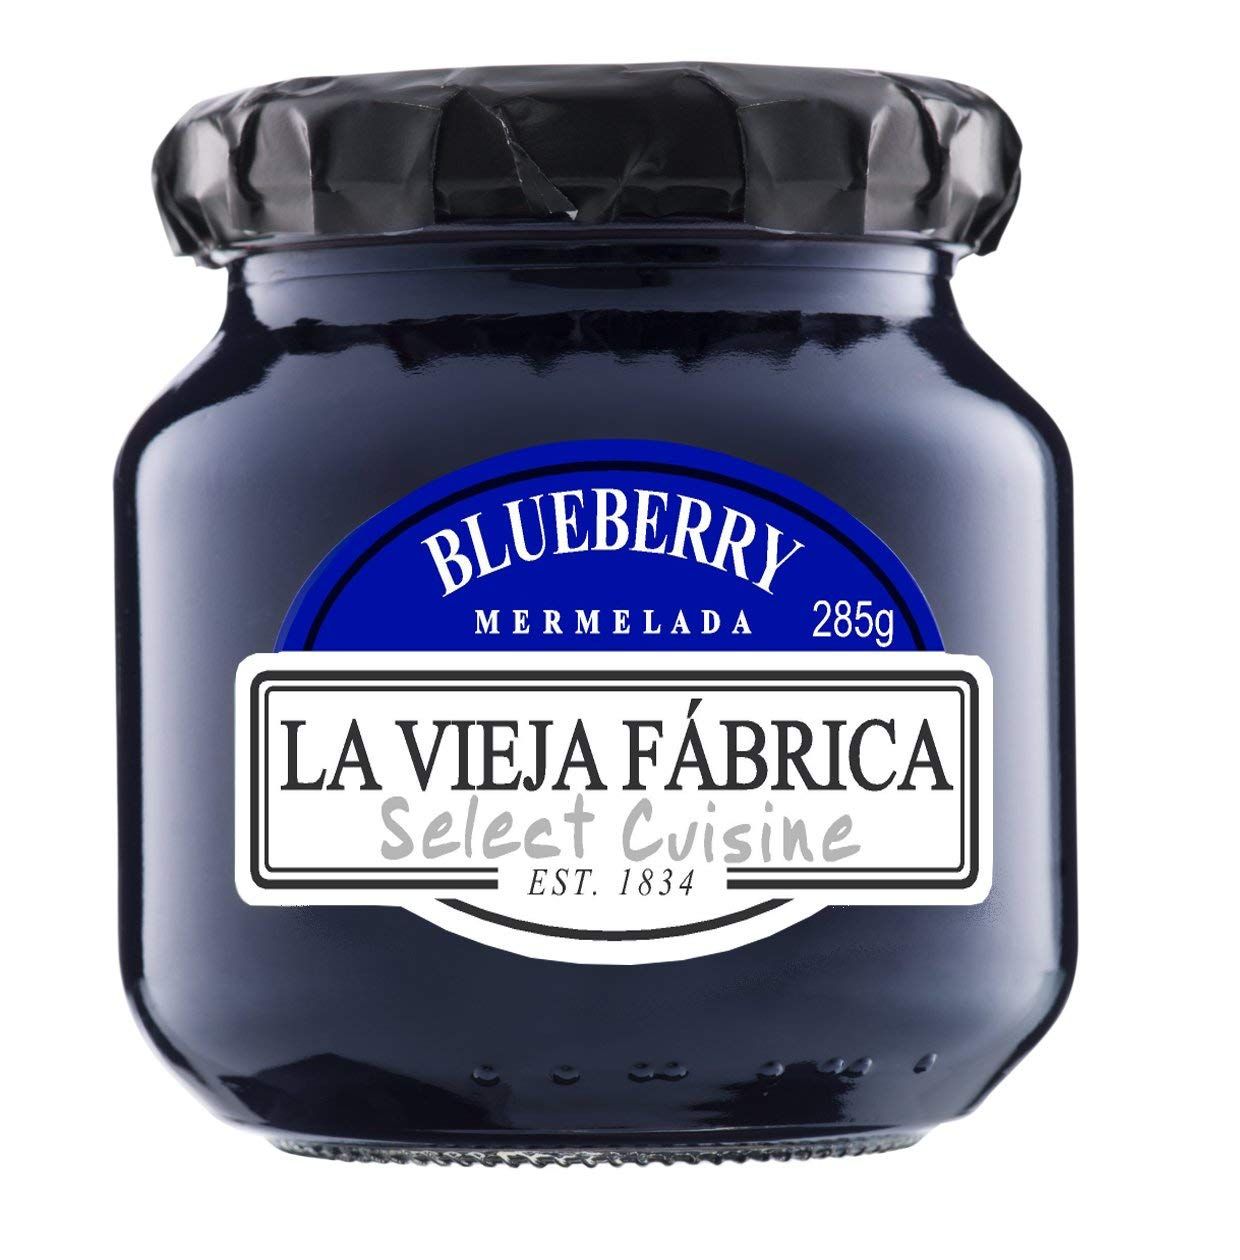 La Vieja Fabrica Blueberry Mermelada (Jam) Image